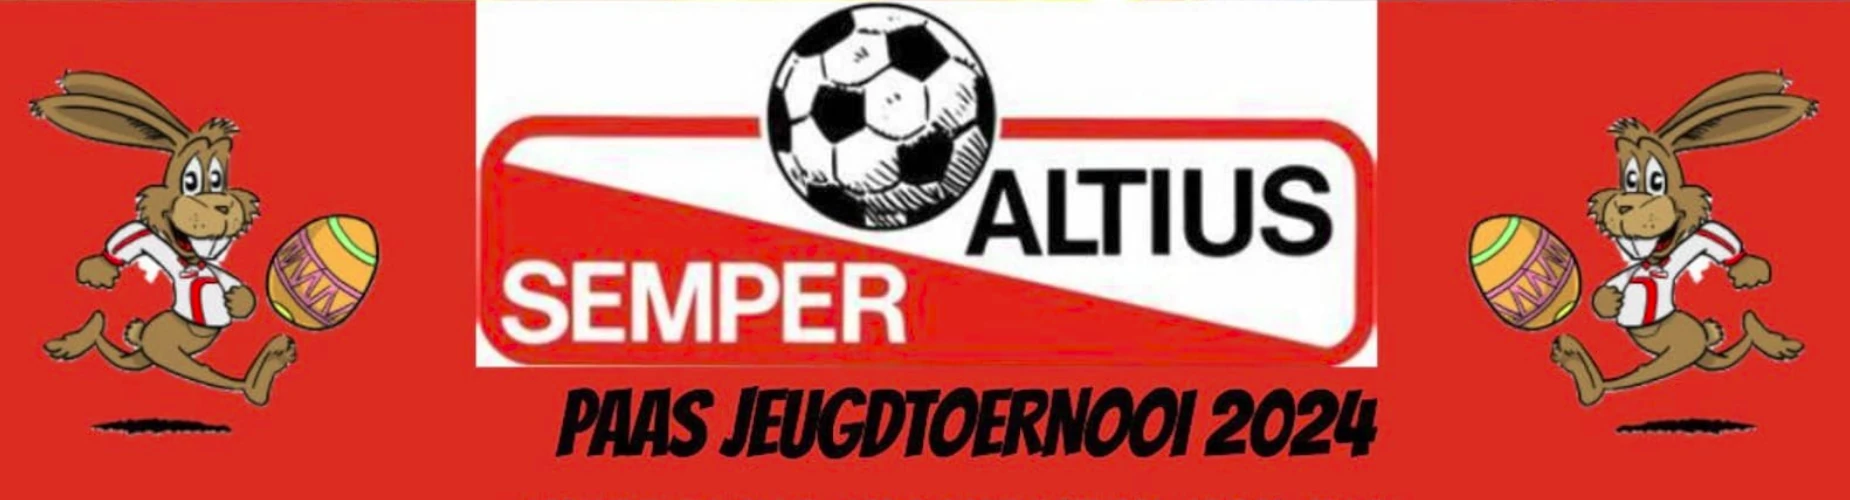 Banner - Paas Jeugdtoernooi 2024 - Semper Altius - Rijswijk